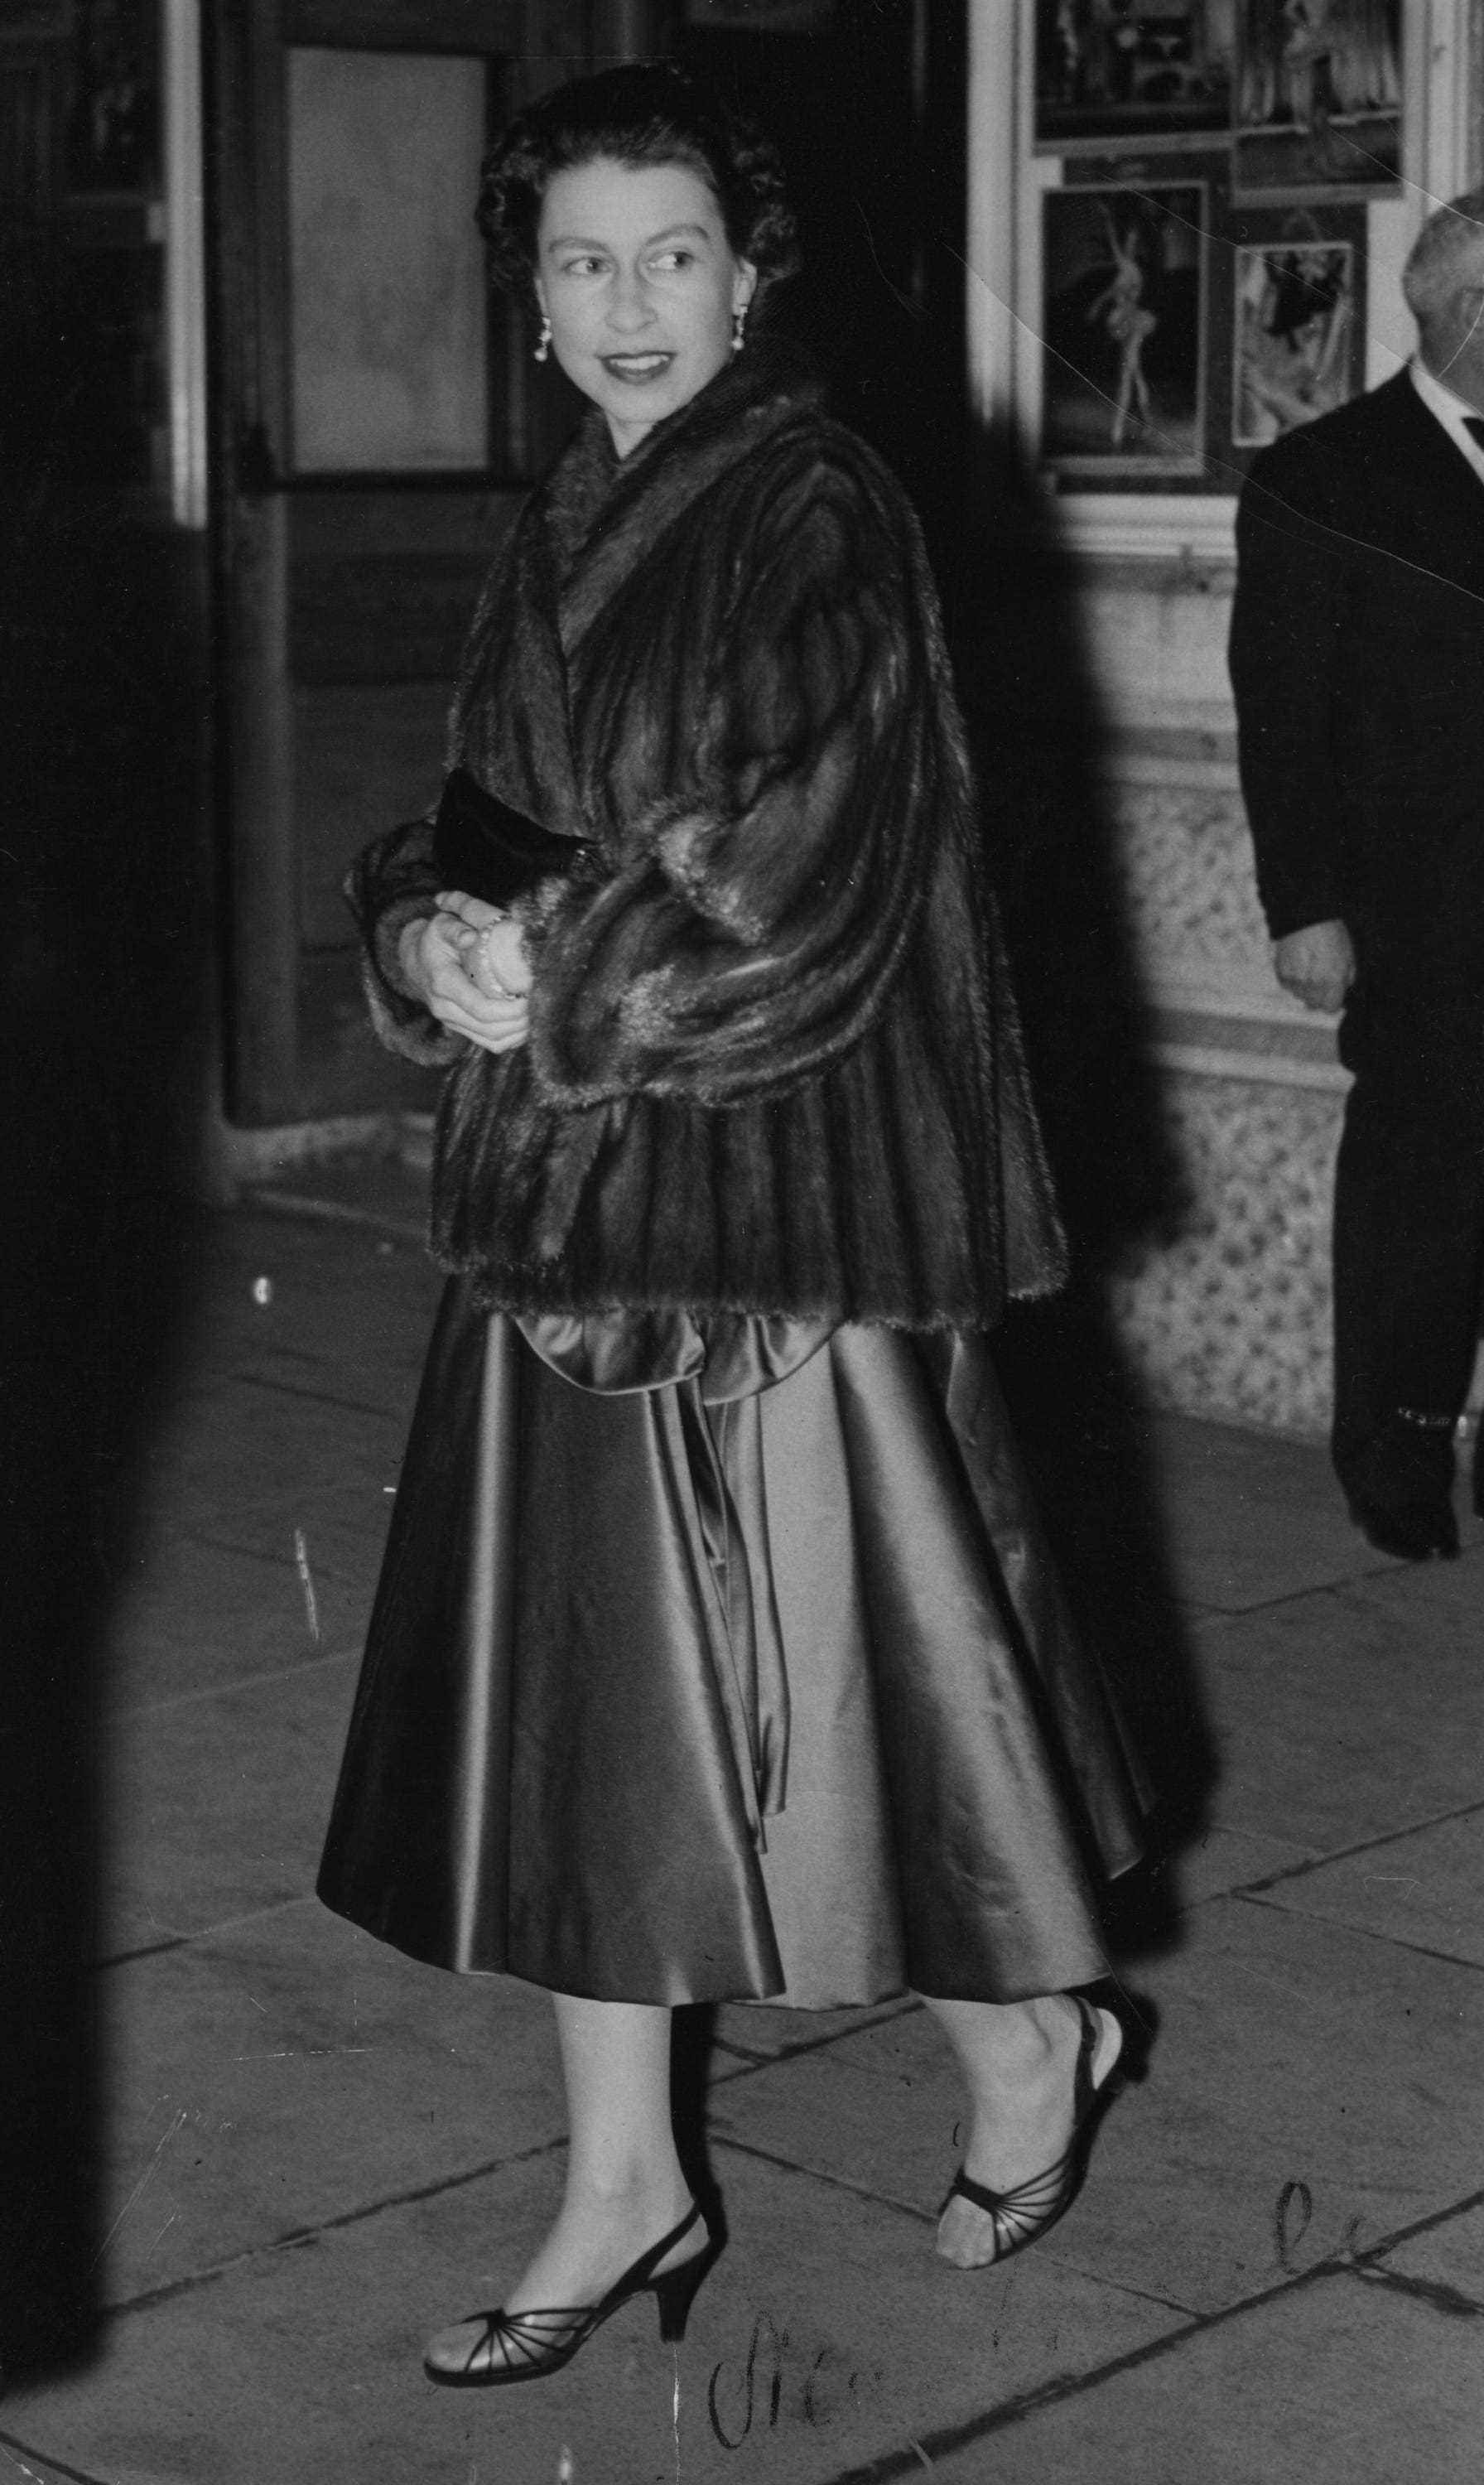 königin elizabeth trägt pelzmantel und kleid